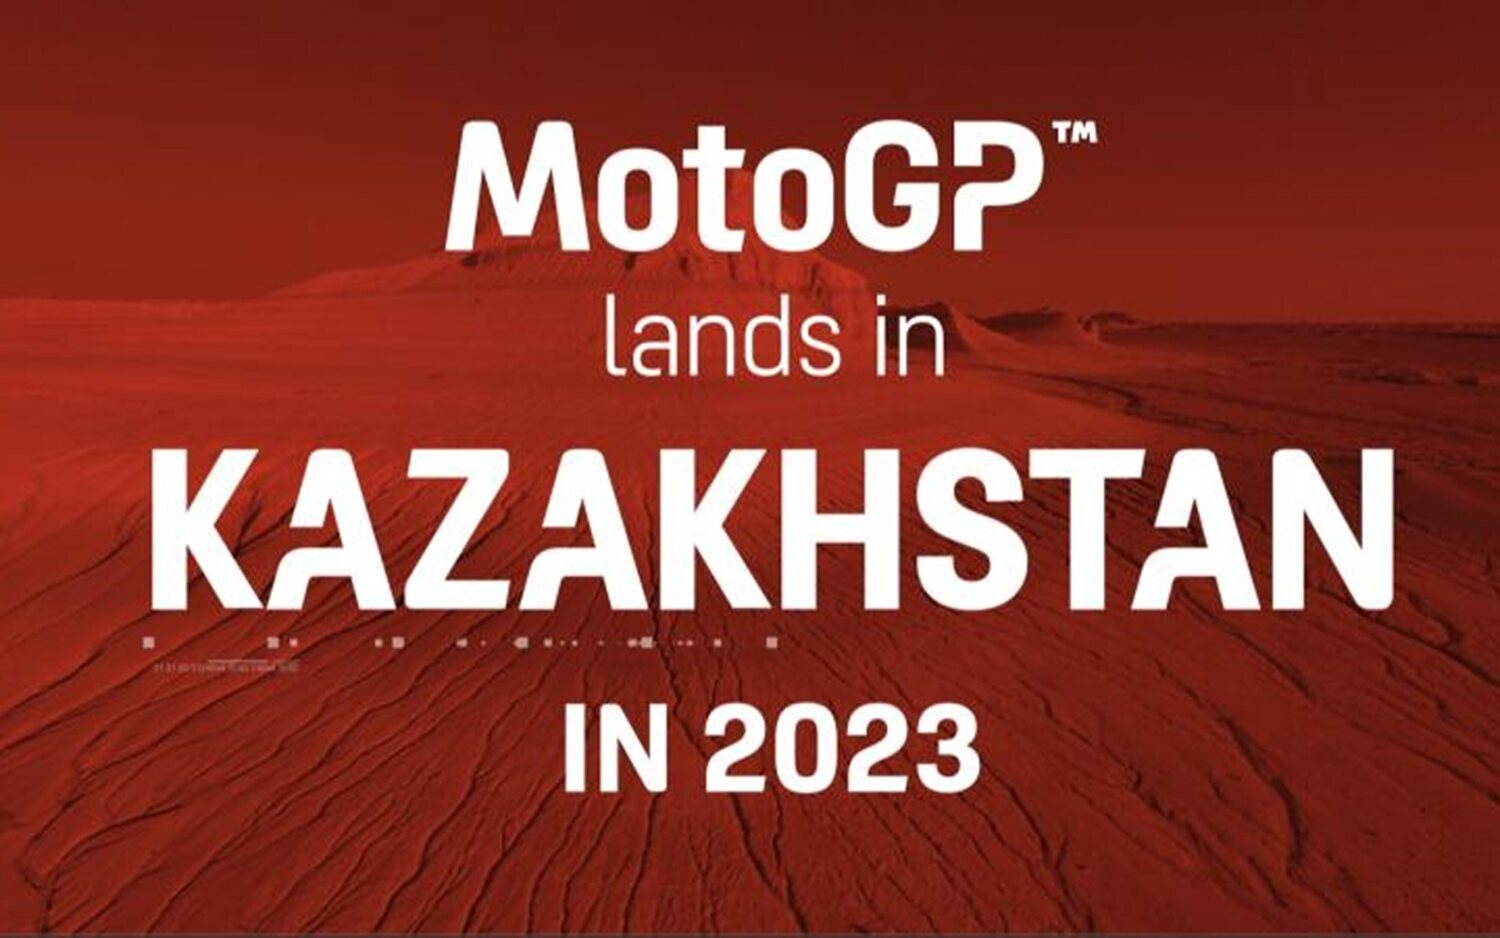 Kazajistan, obligados a cancelar su participación este 2023